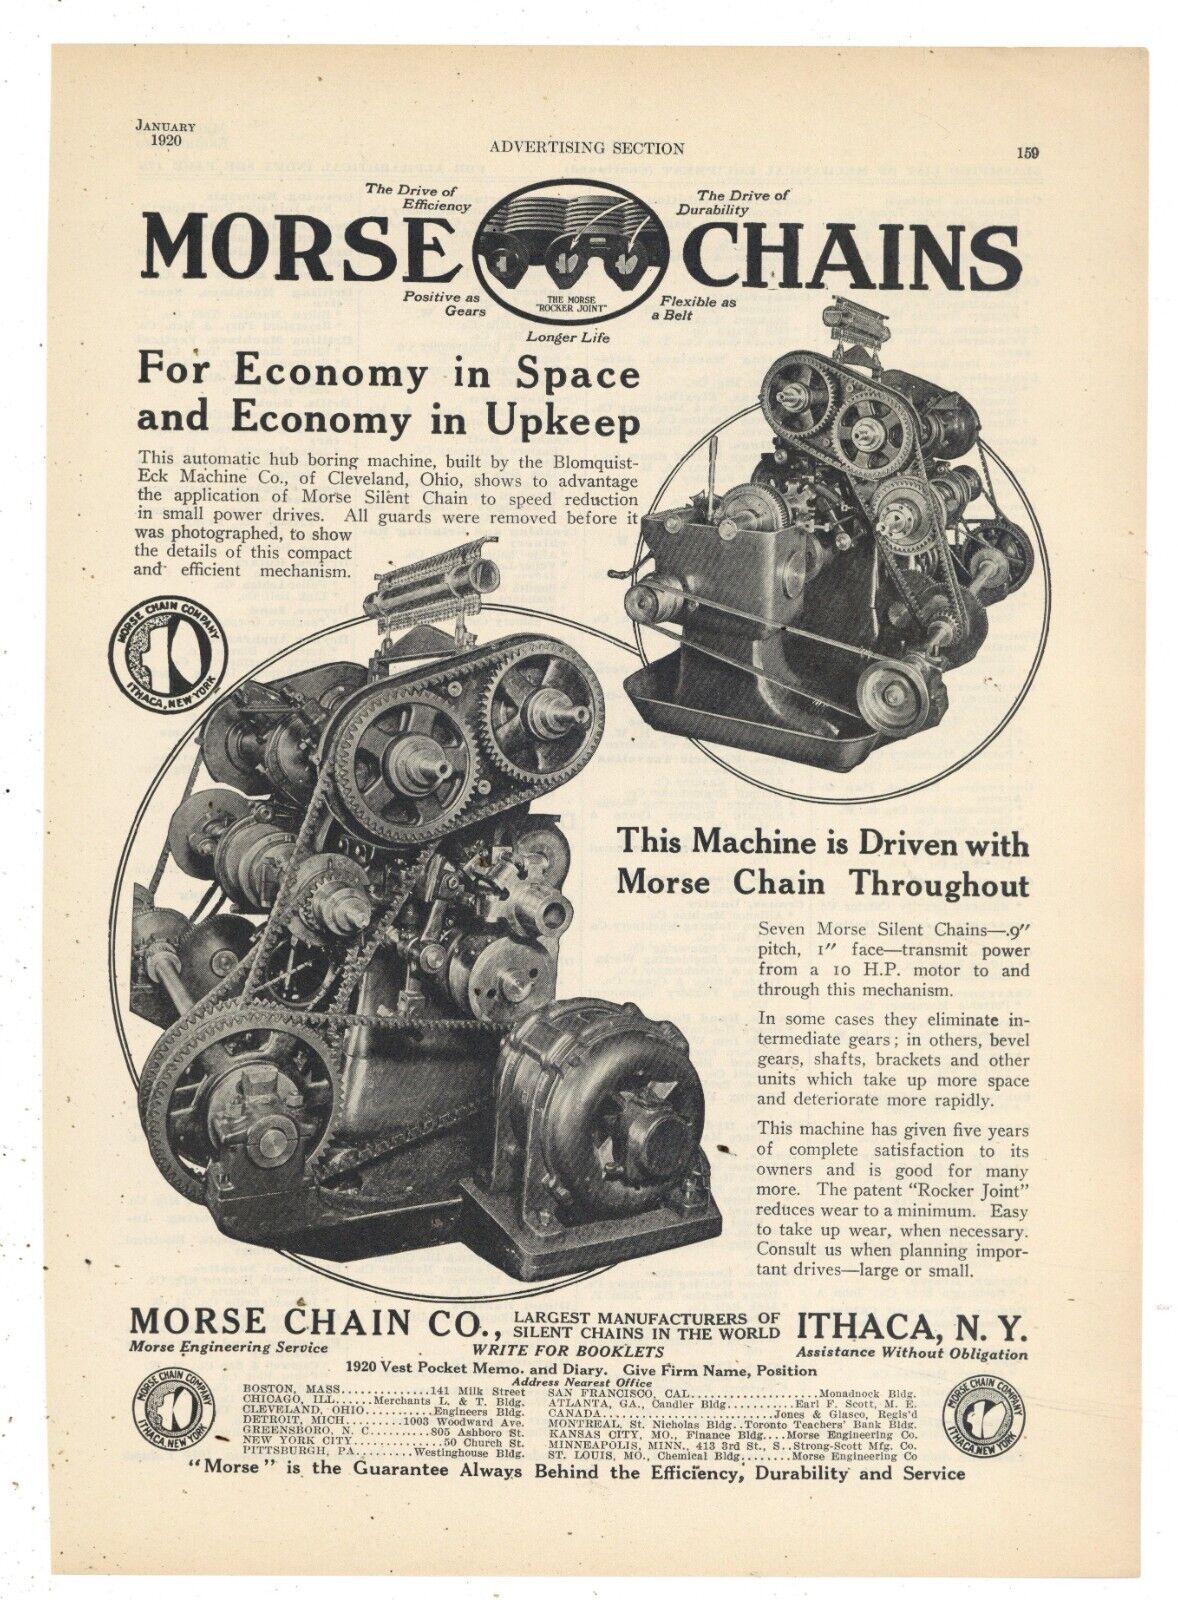 1920 Morse Chain Co. Ad: Hub Boring Machine by Blomquist-Eck Machine, Cleveland